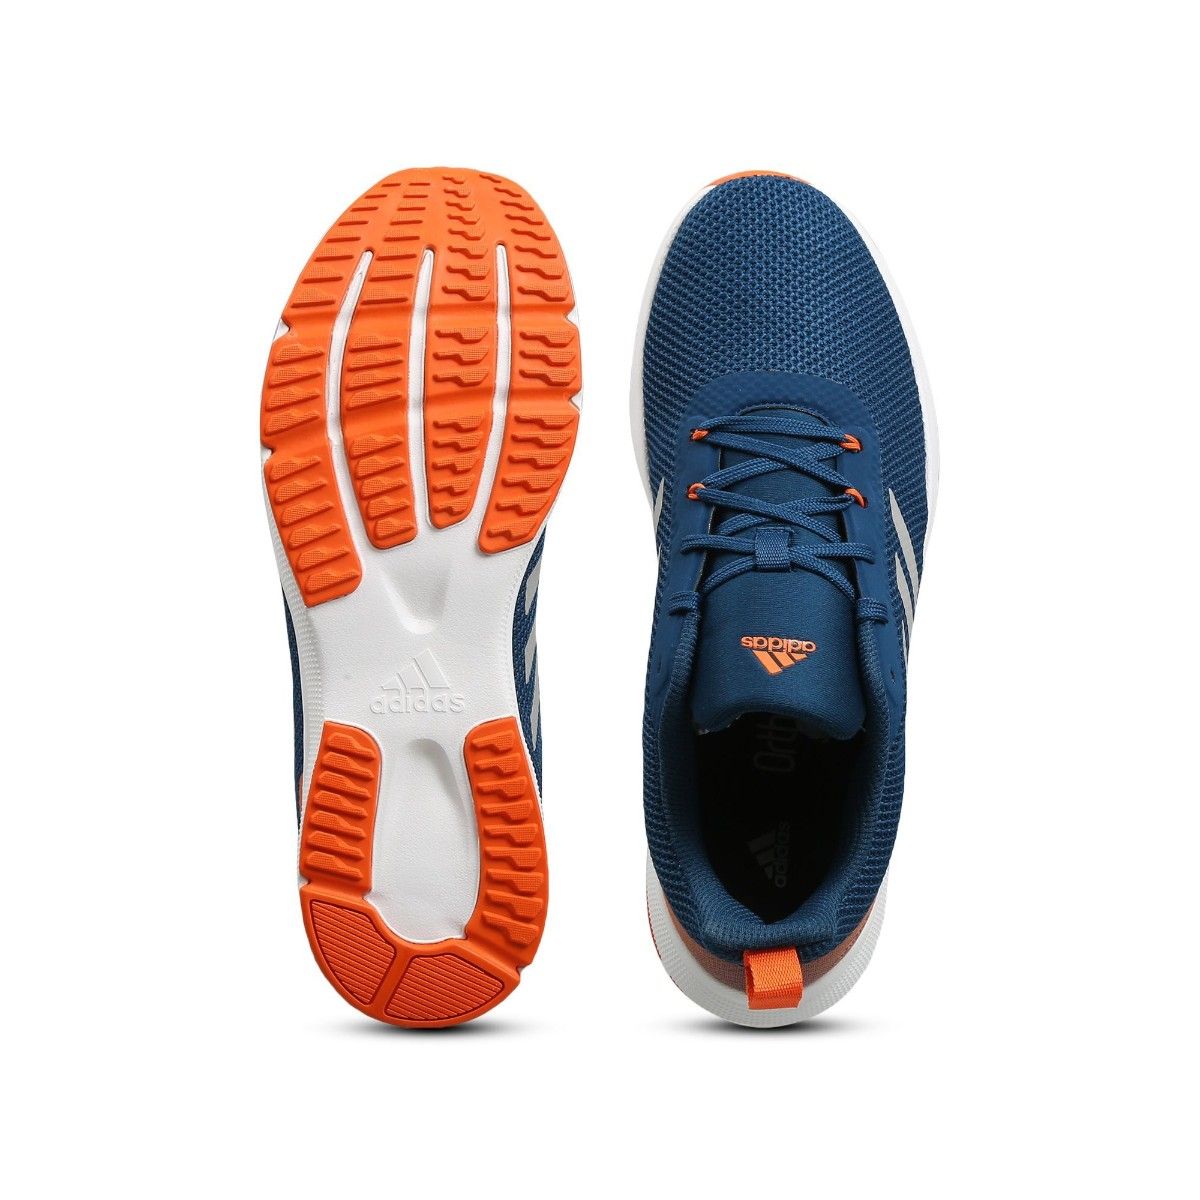 Adidas by Stella McCartney Solarglide Sneakers Orange White Size 8 | eBay